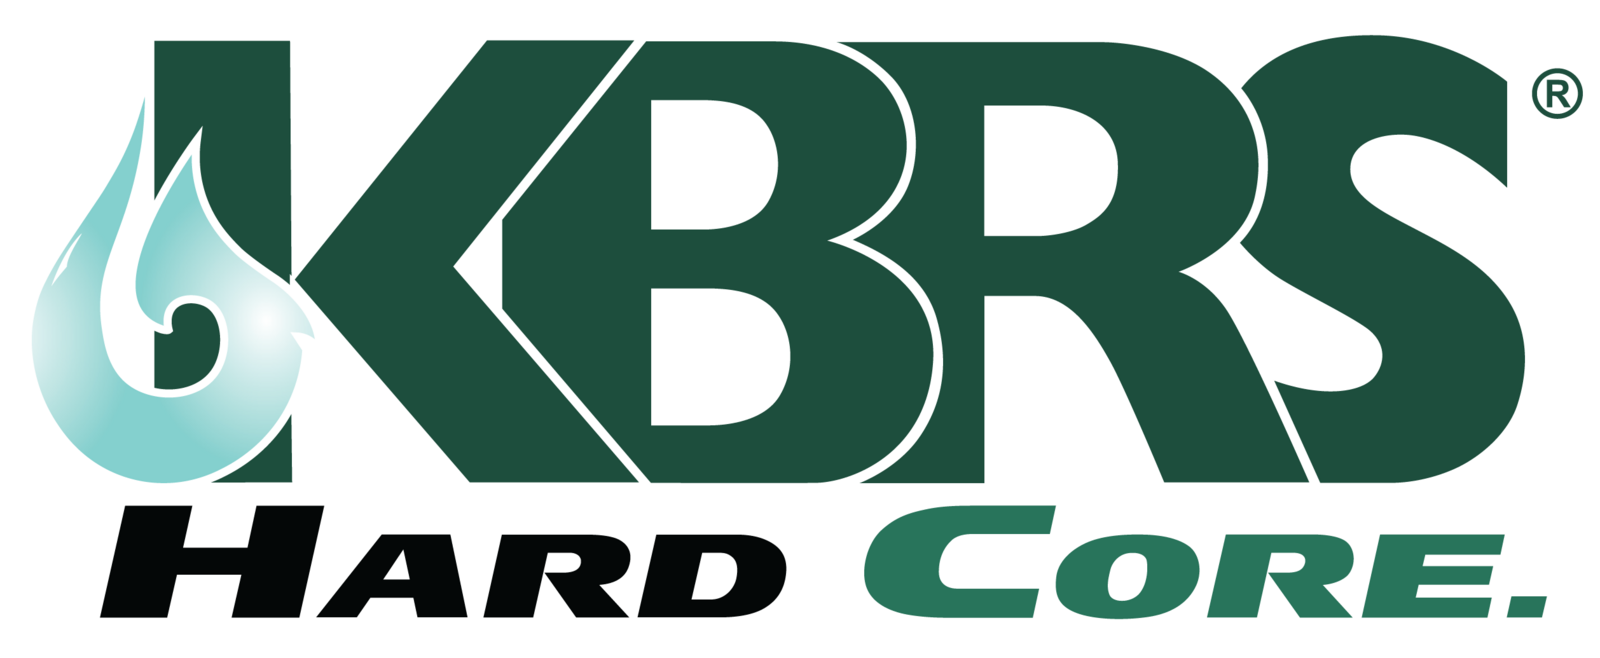 kbrs_shower_systems_logo